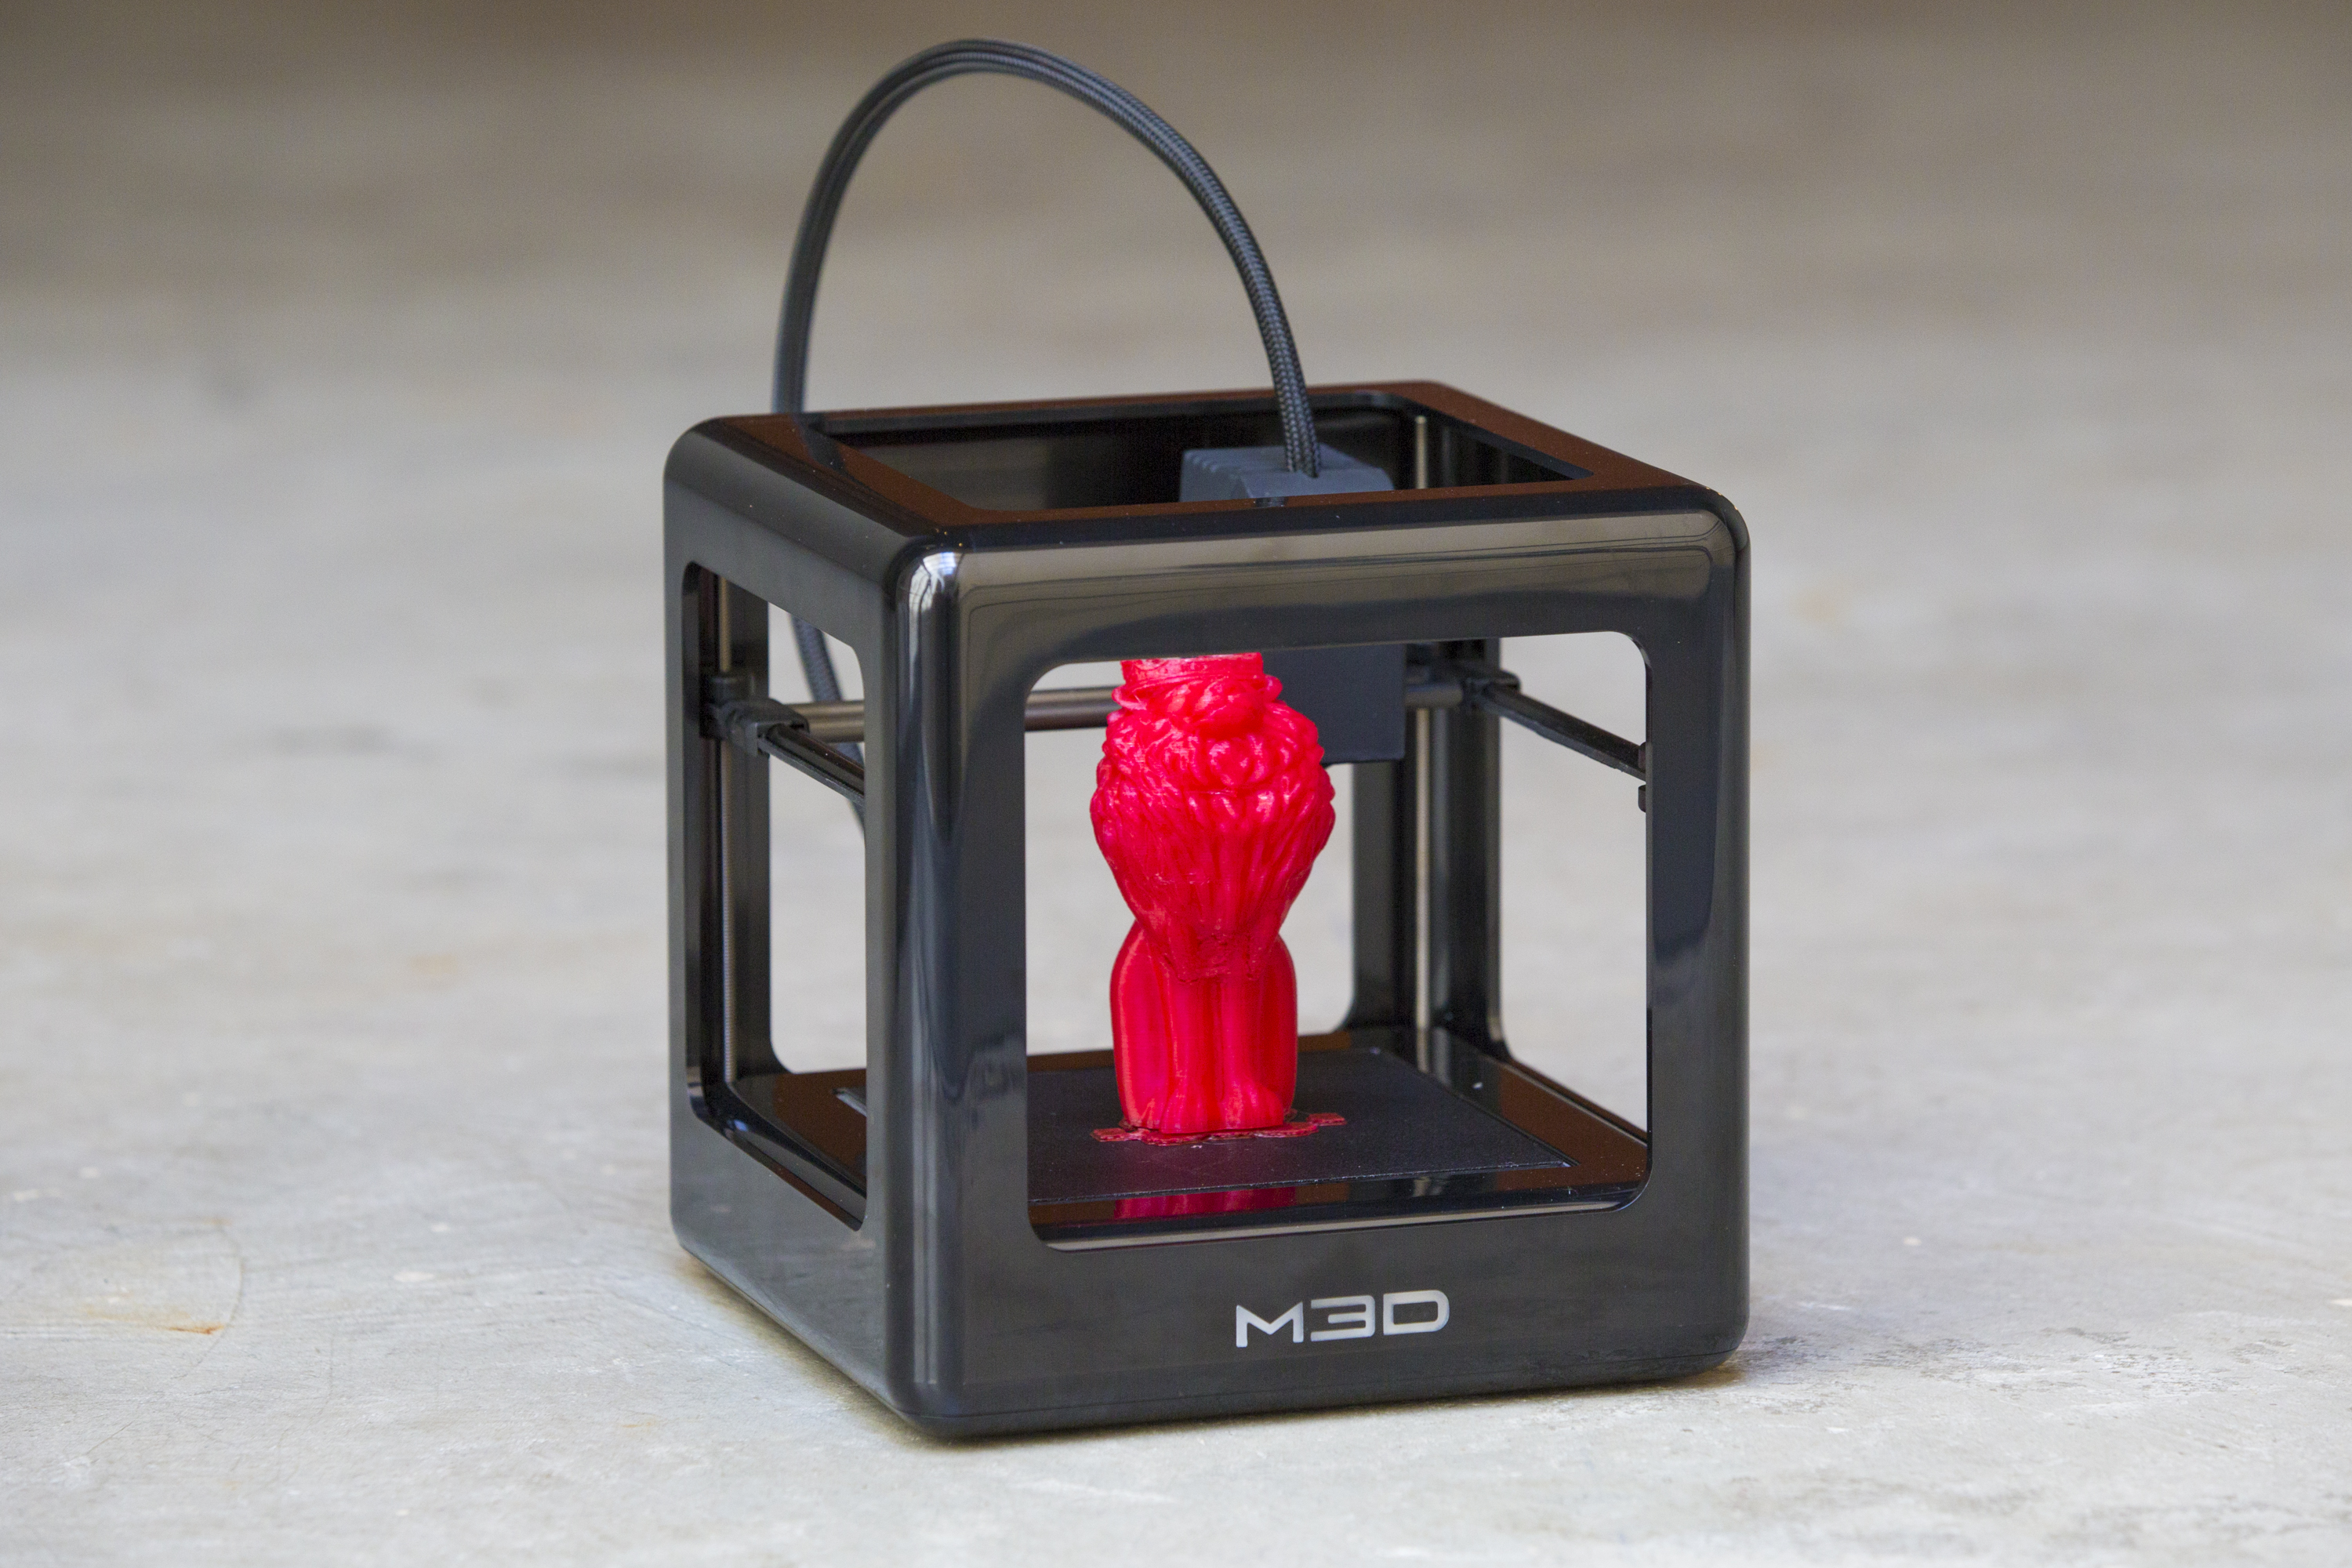 M3D Micro 3D Printer review: A cheap (ish) printer with 3D prints